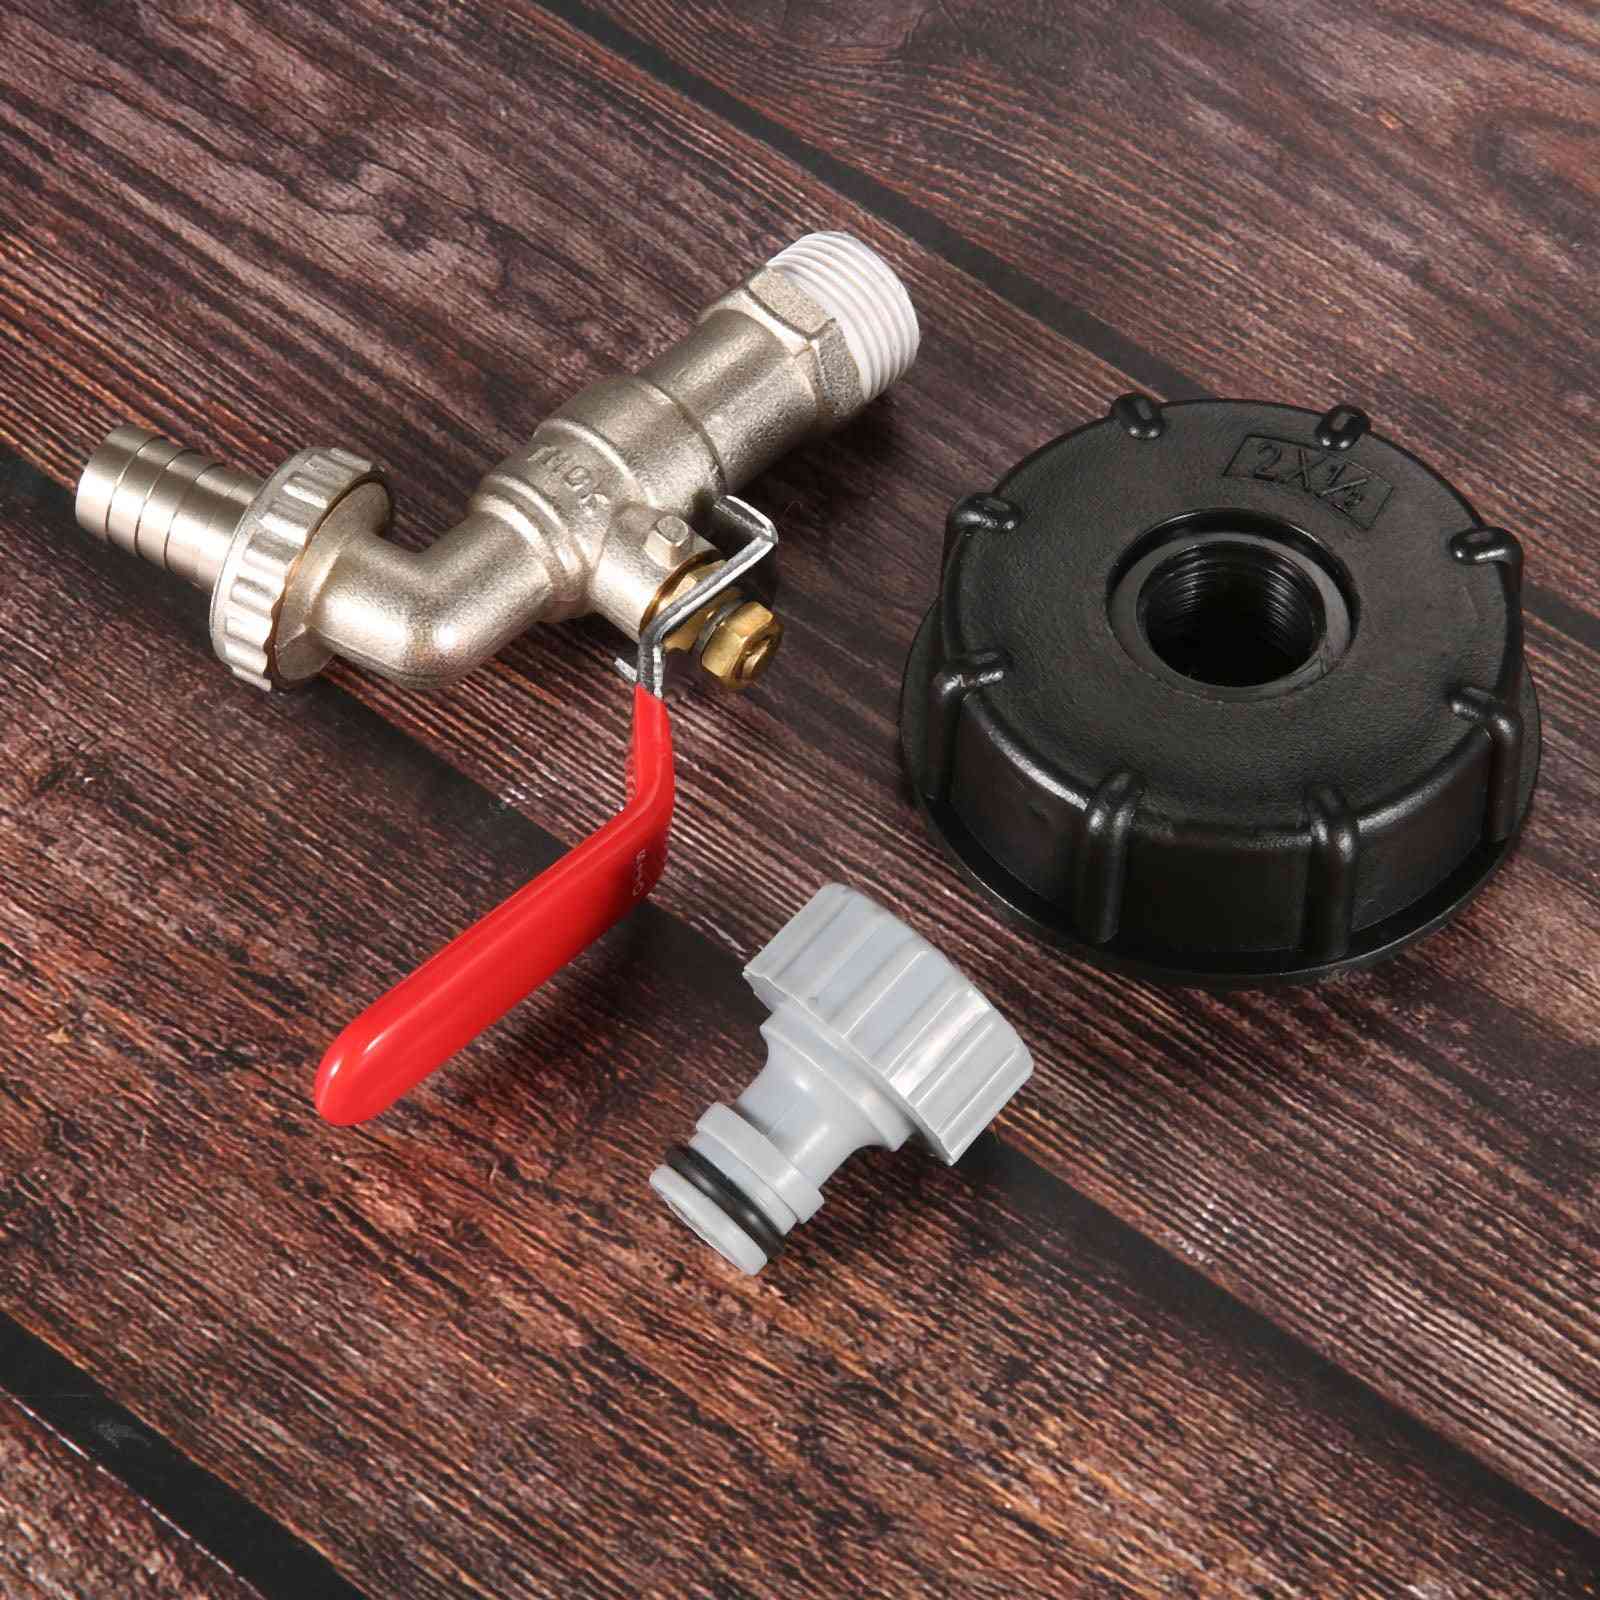 Replacement Valve, Detachable Home Garden Water Pipe Connectors